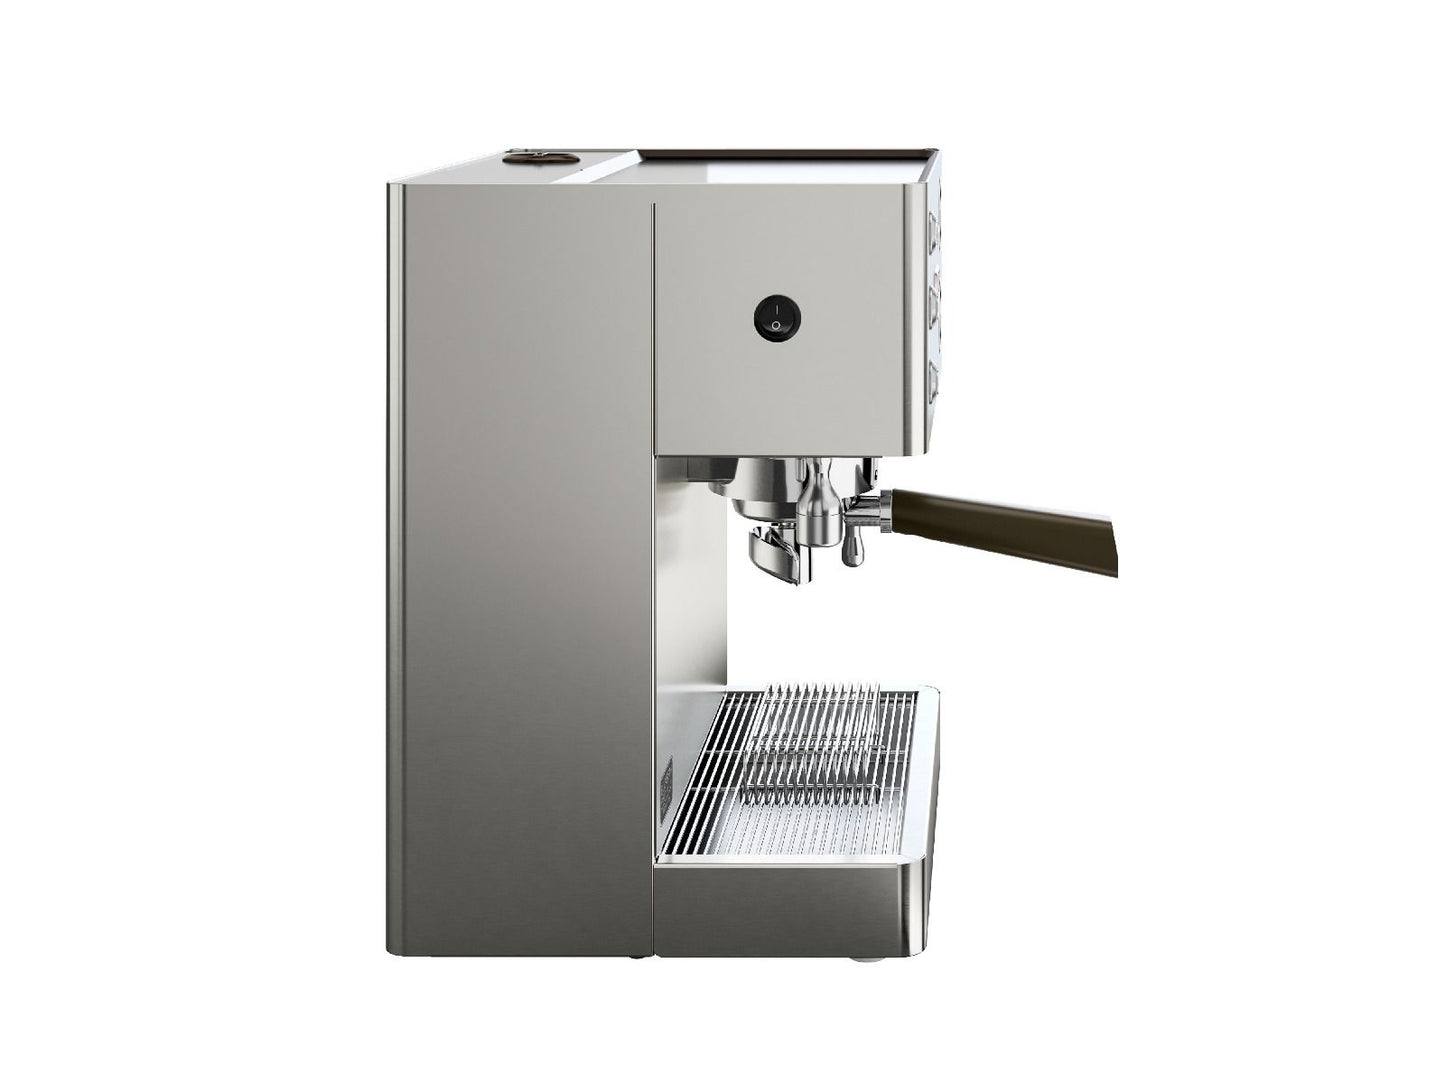 Lelit Elizabeth Espresso Machine